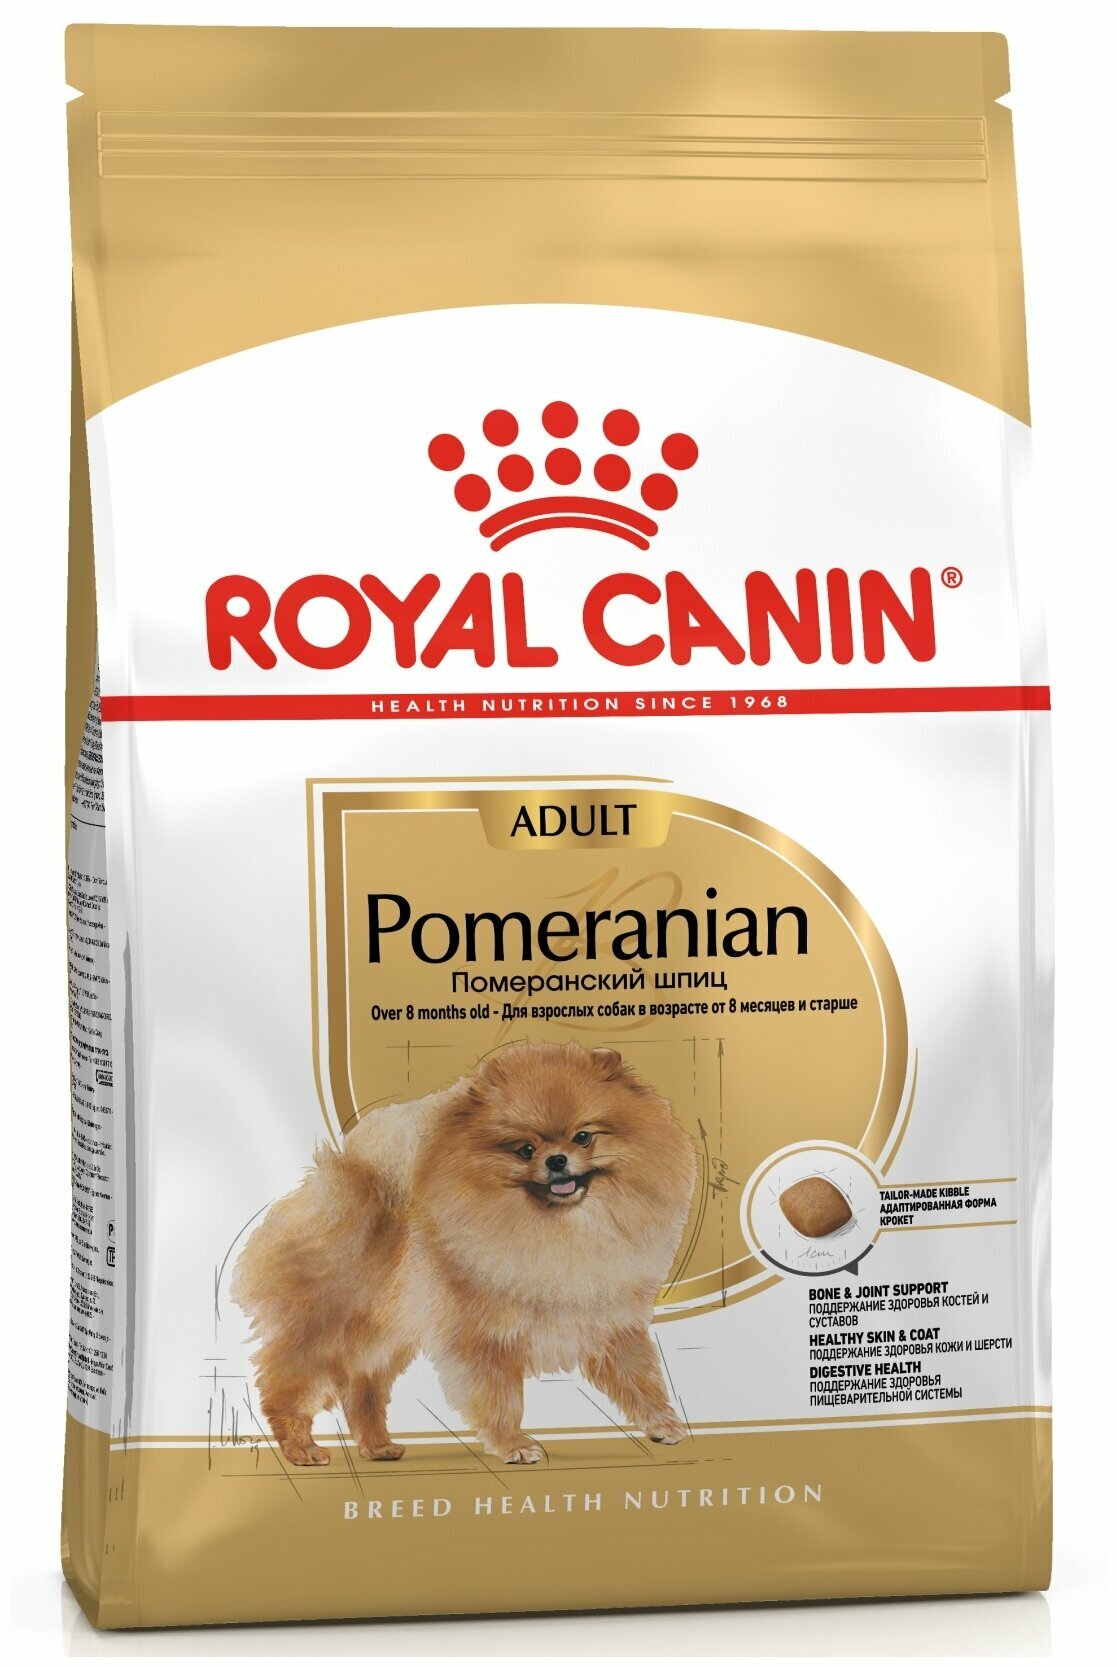 Сухой корм для собак Royal Canin Померанский шпиц 1.5 кг